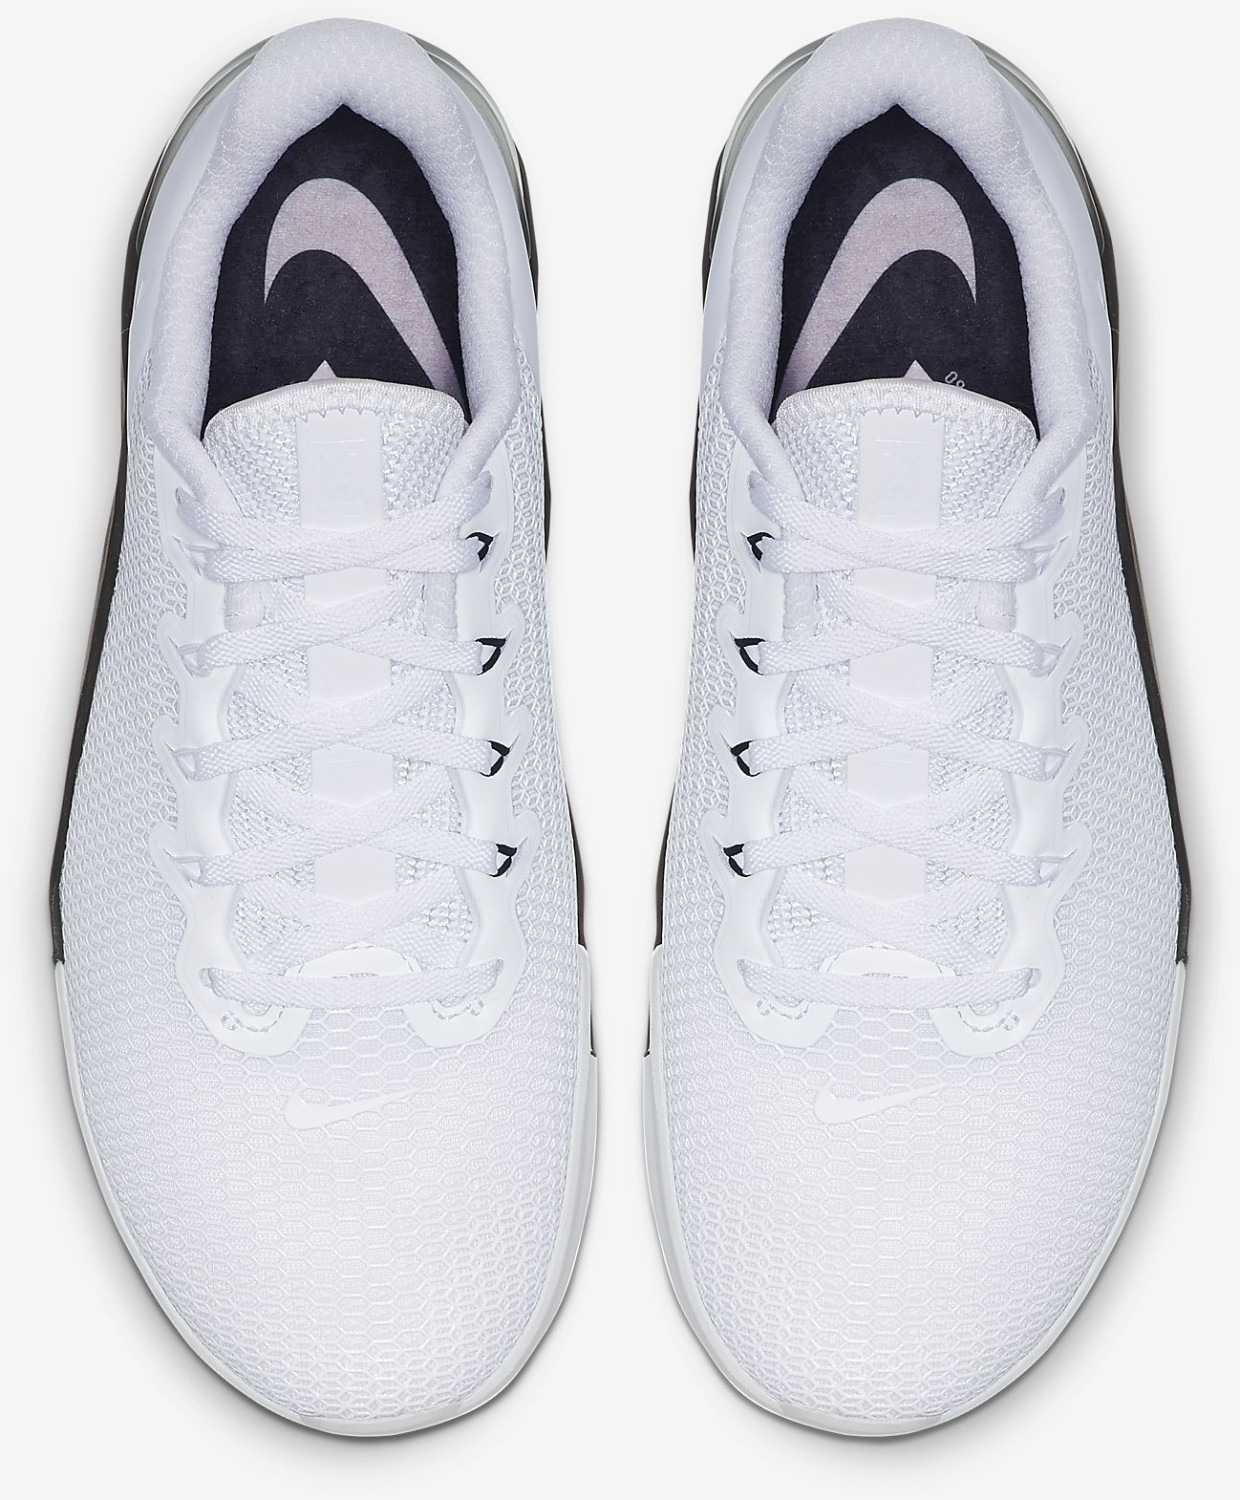 Buy Nike Metcon 5 Women white/black/white from £109.99 (Today) – Best ...